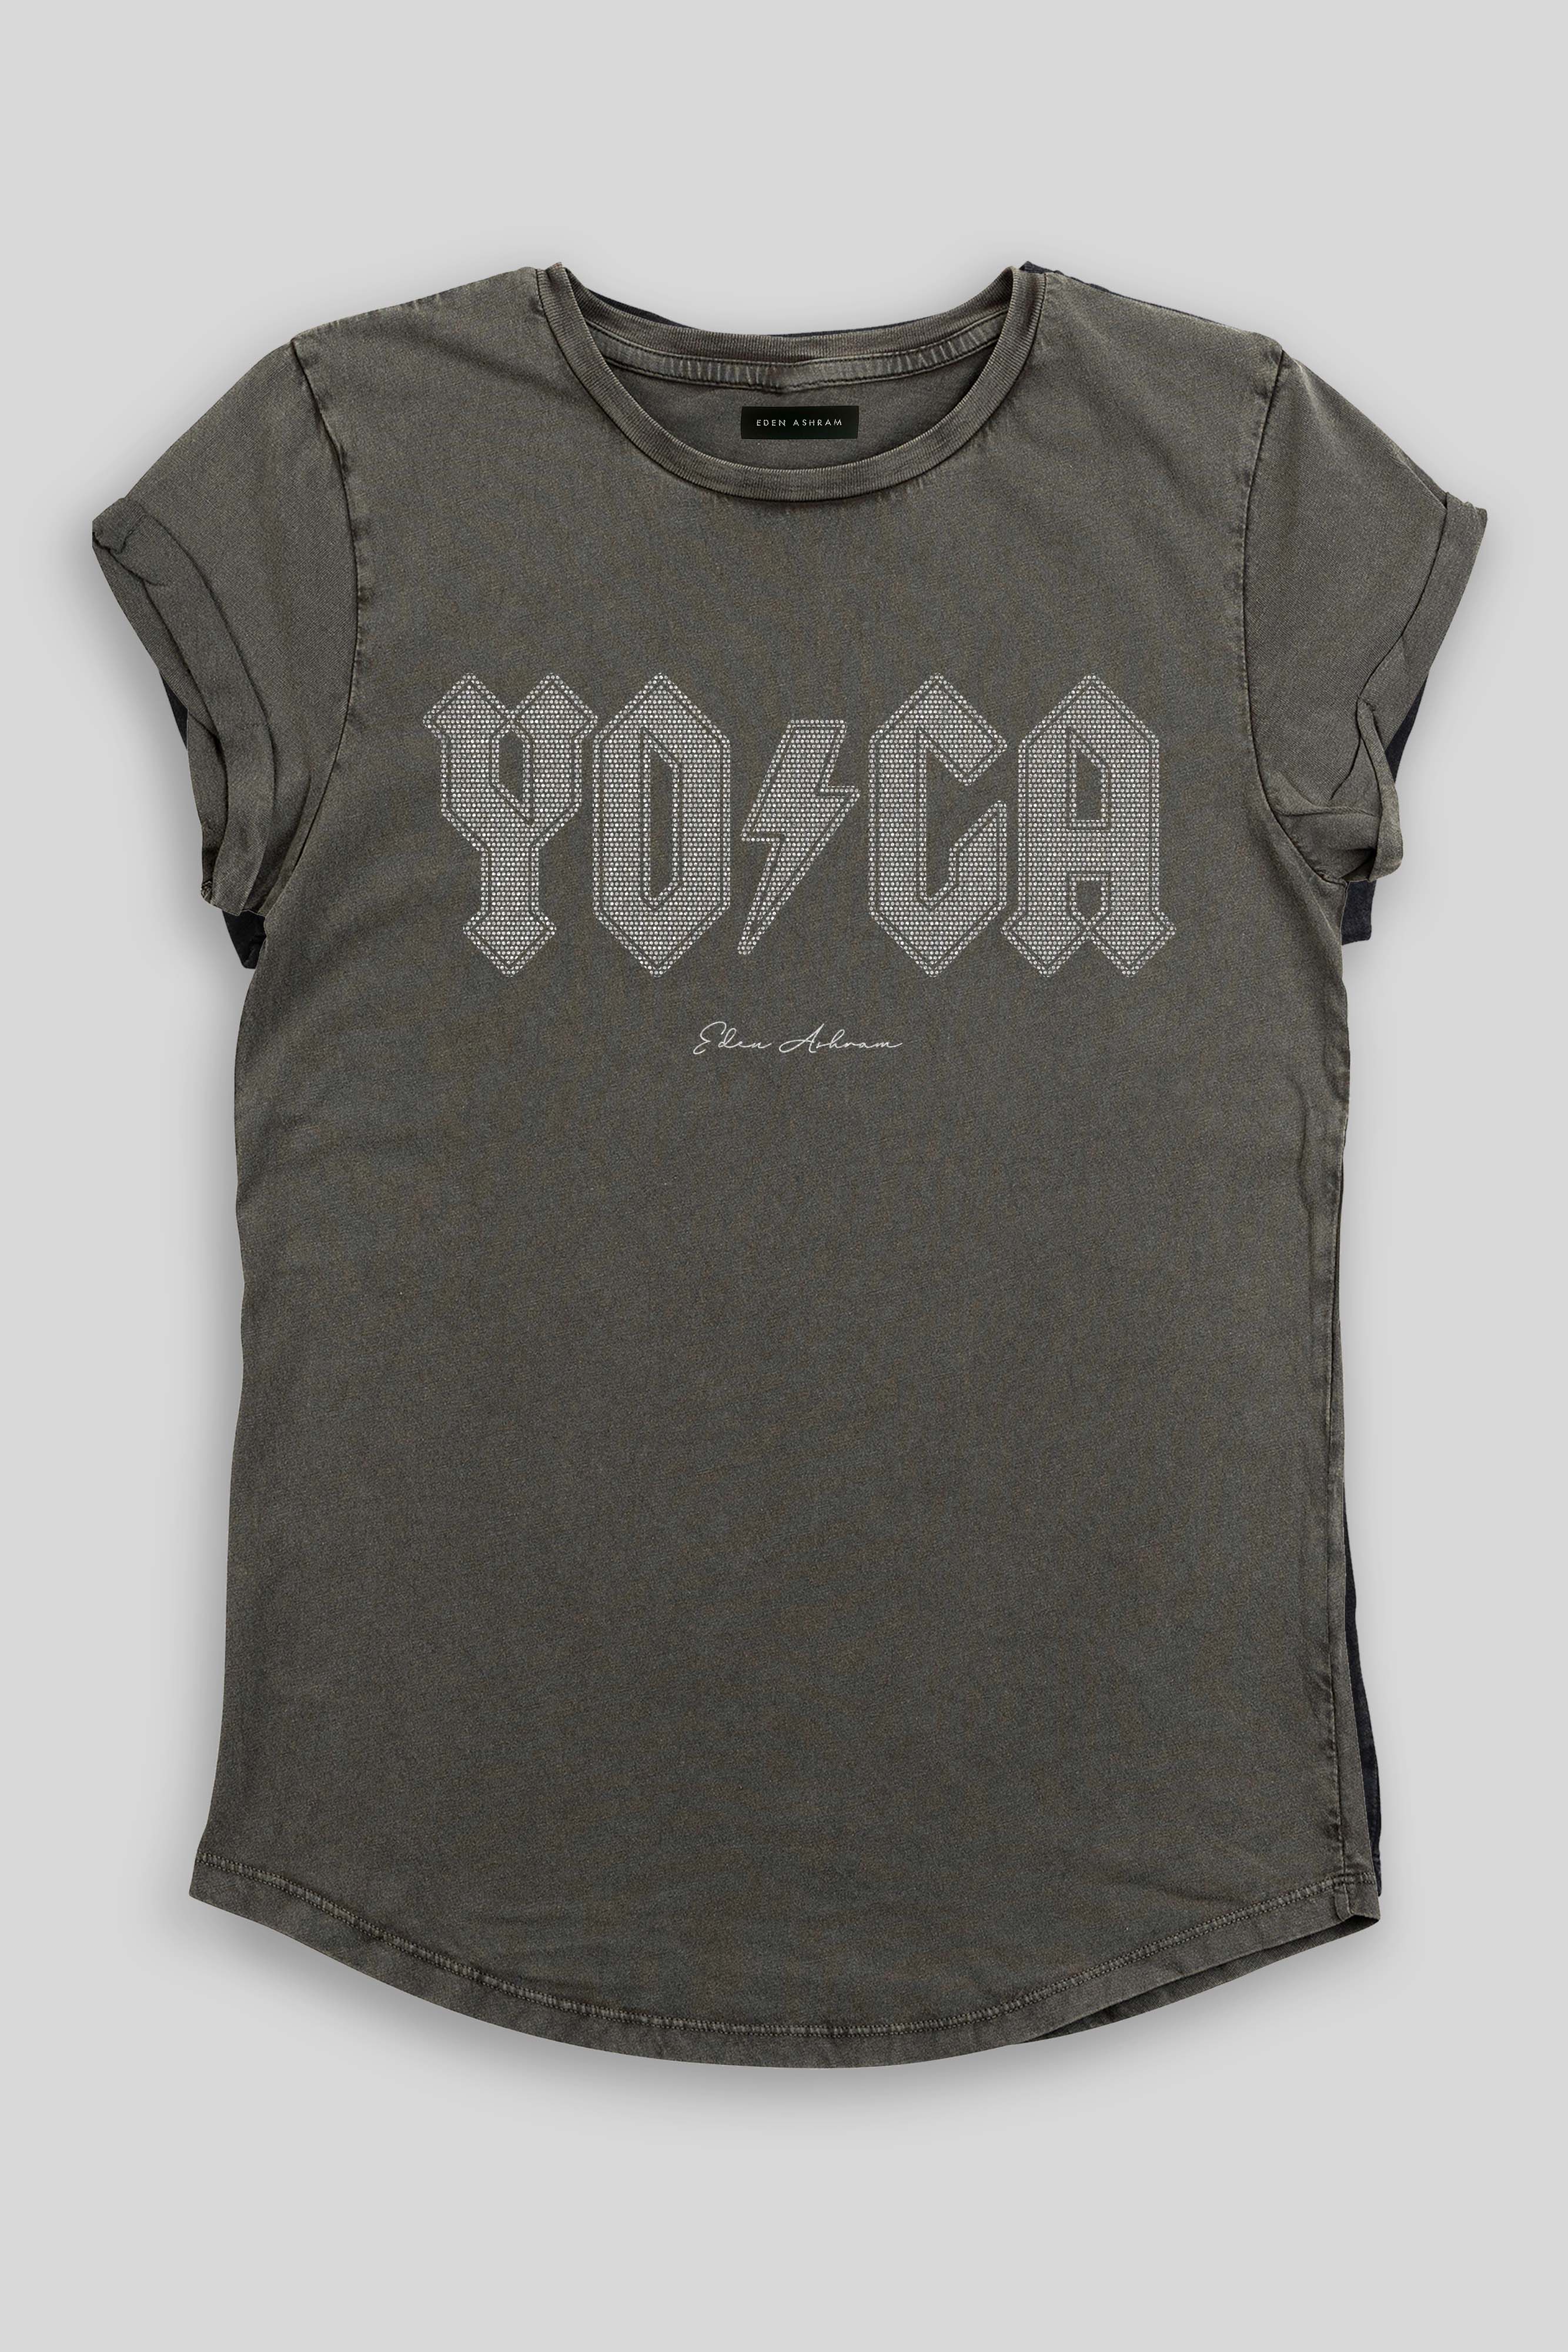 EDEN ASHRAM Yoga Tour Glitter Rolled Sleeve Tour T-Shirt - Stonewash Black Stonewash Grey